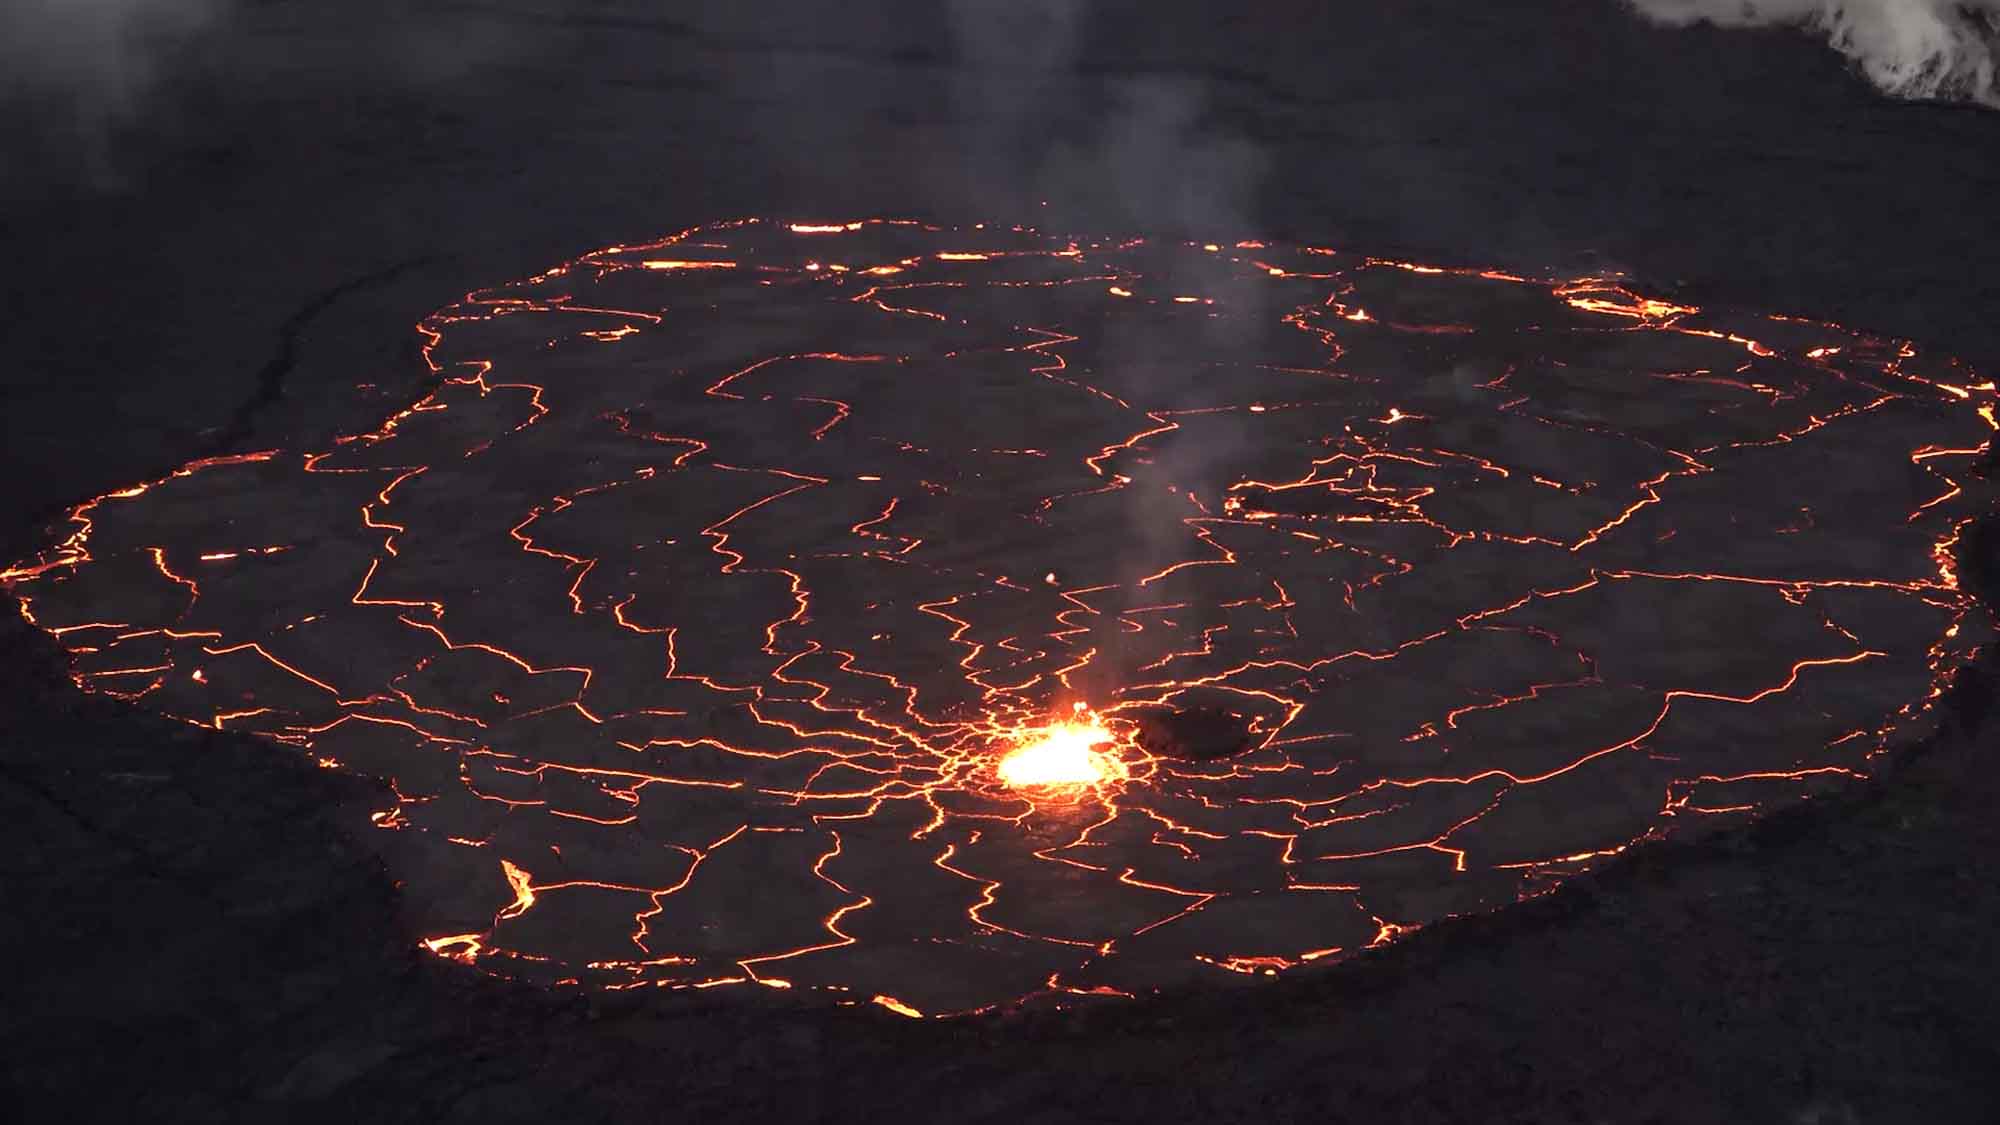 Volcano’s Otherworldly Red-Hot Lava Eruption